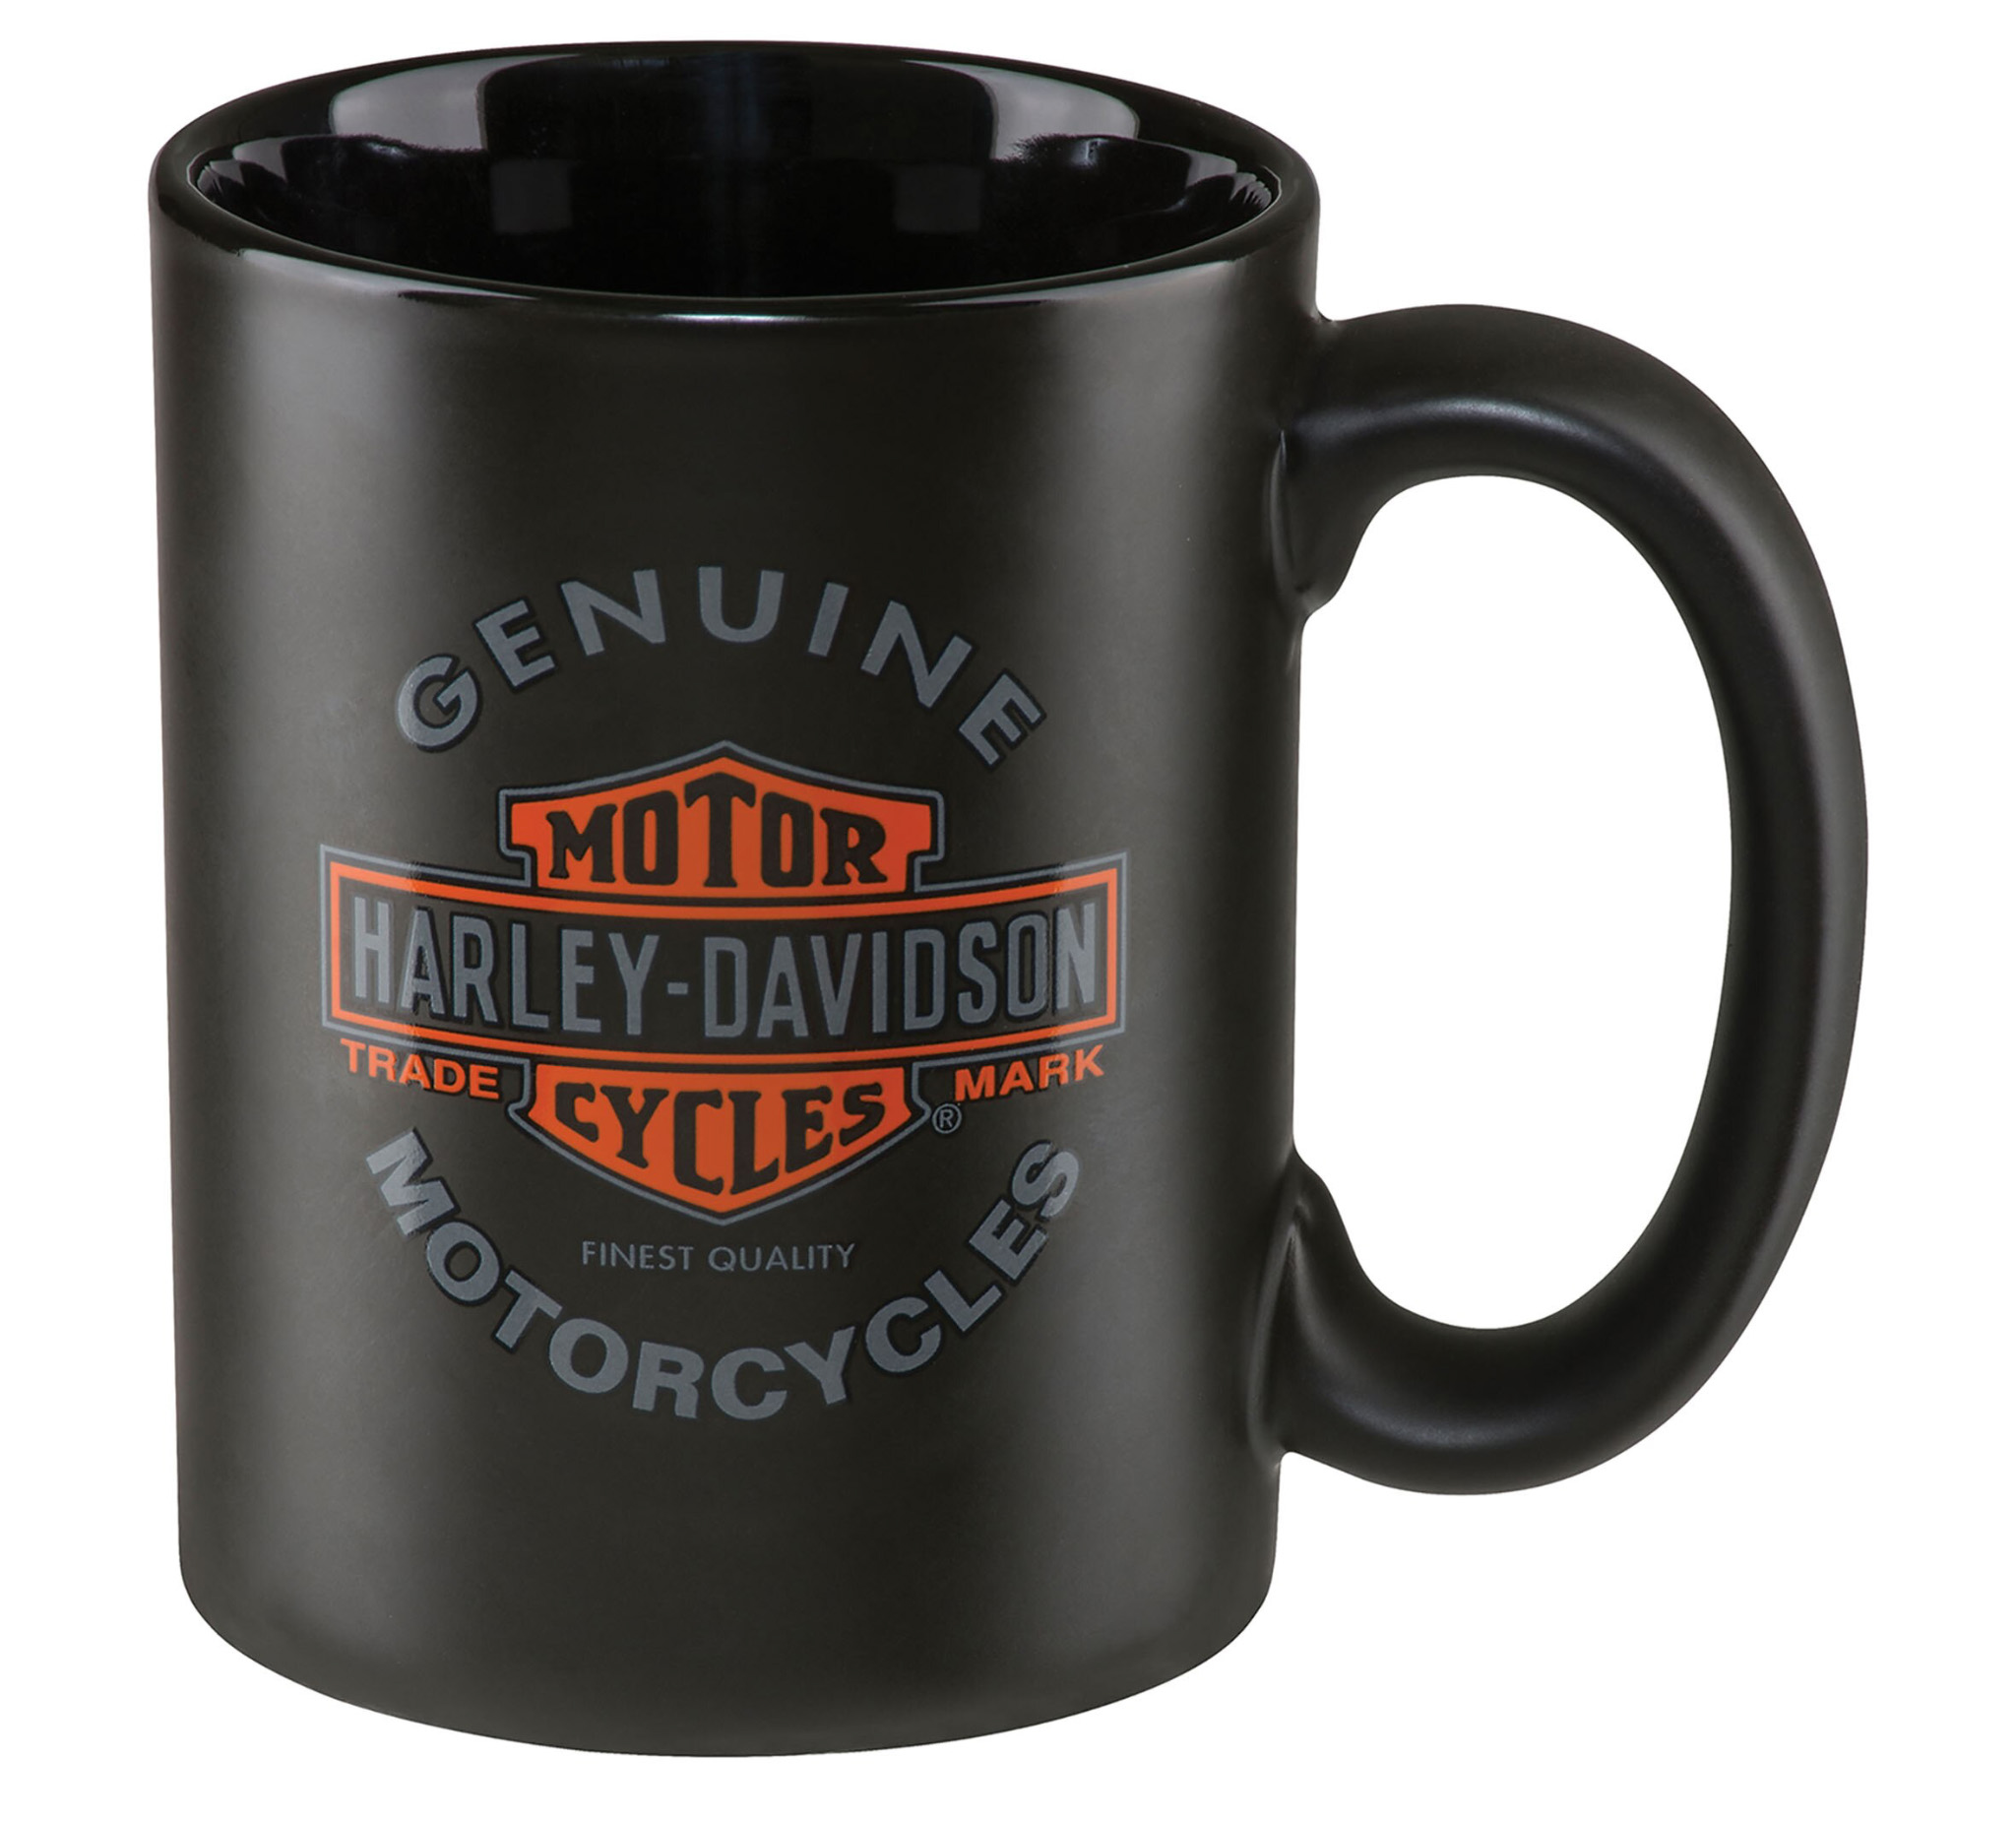 Genuine Motorcycles Mug